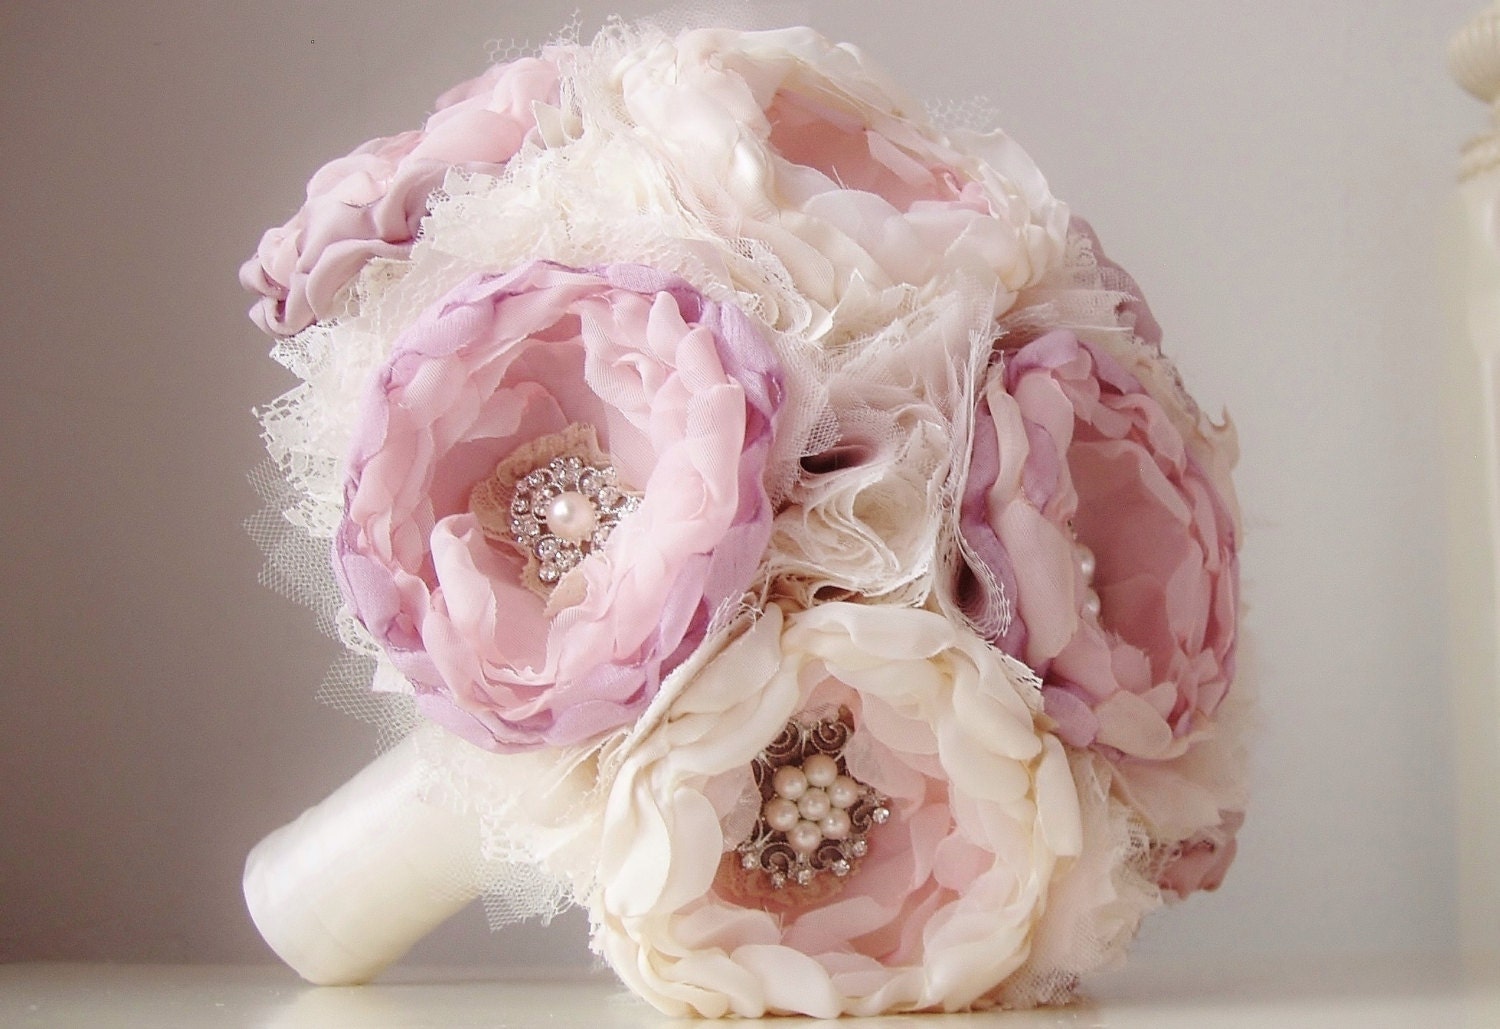 Handmade Architecture Bouquet Crown Purple Fabric Bridal 